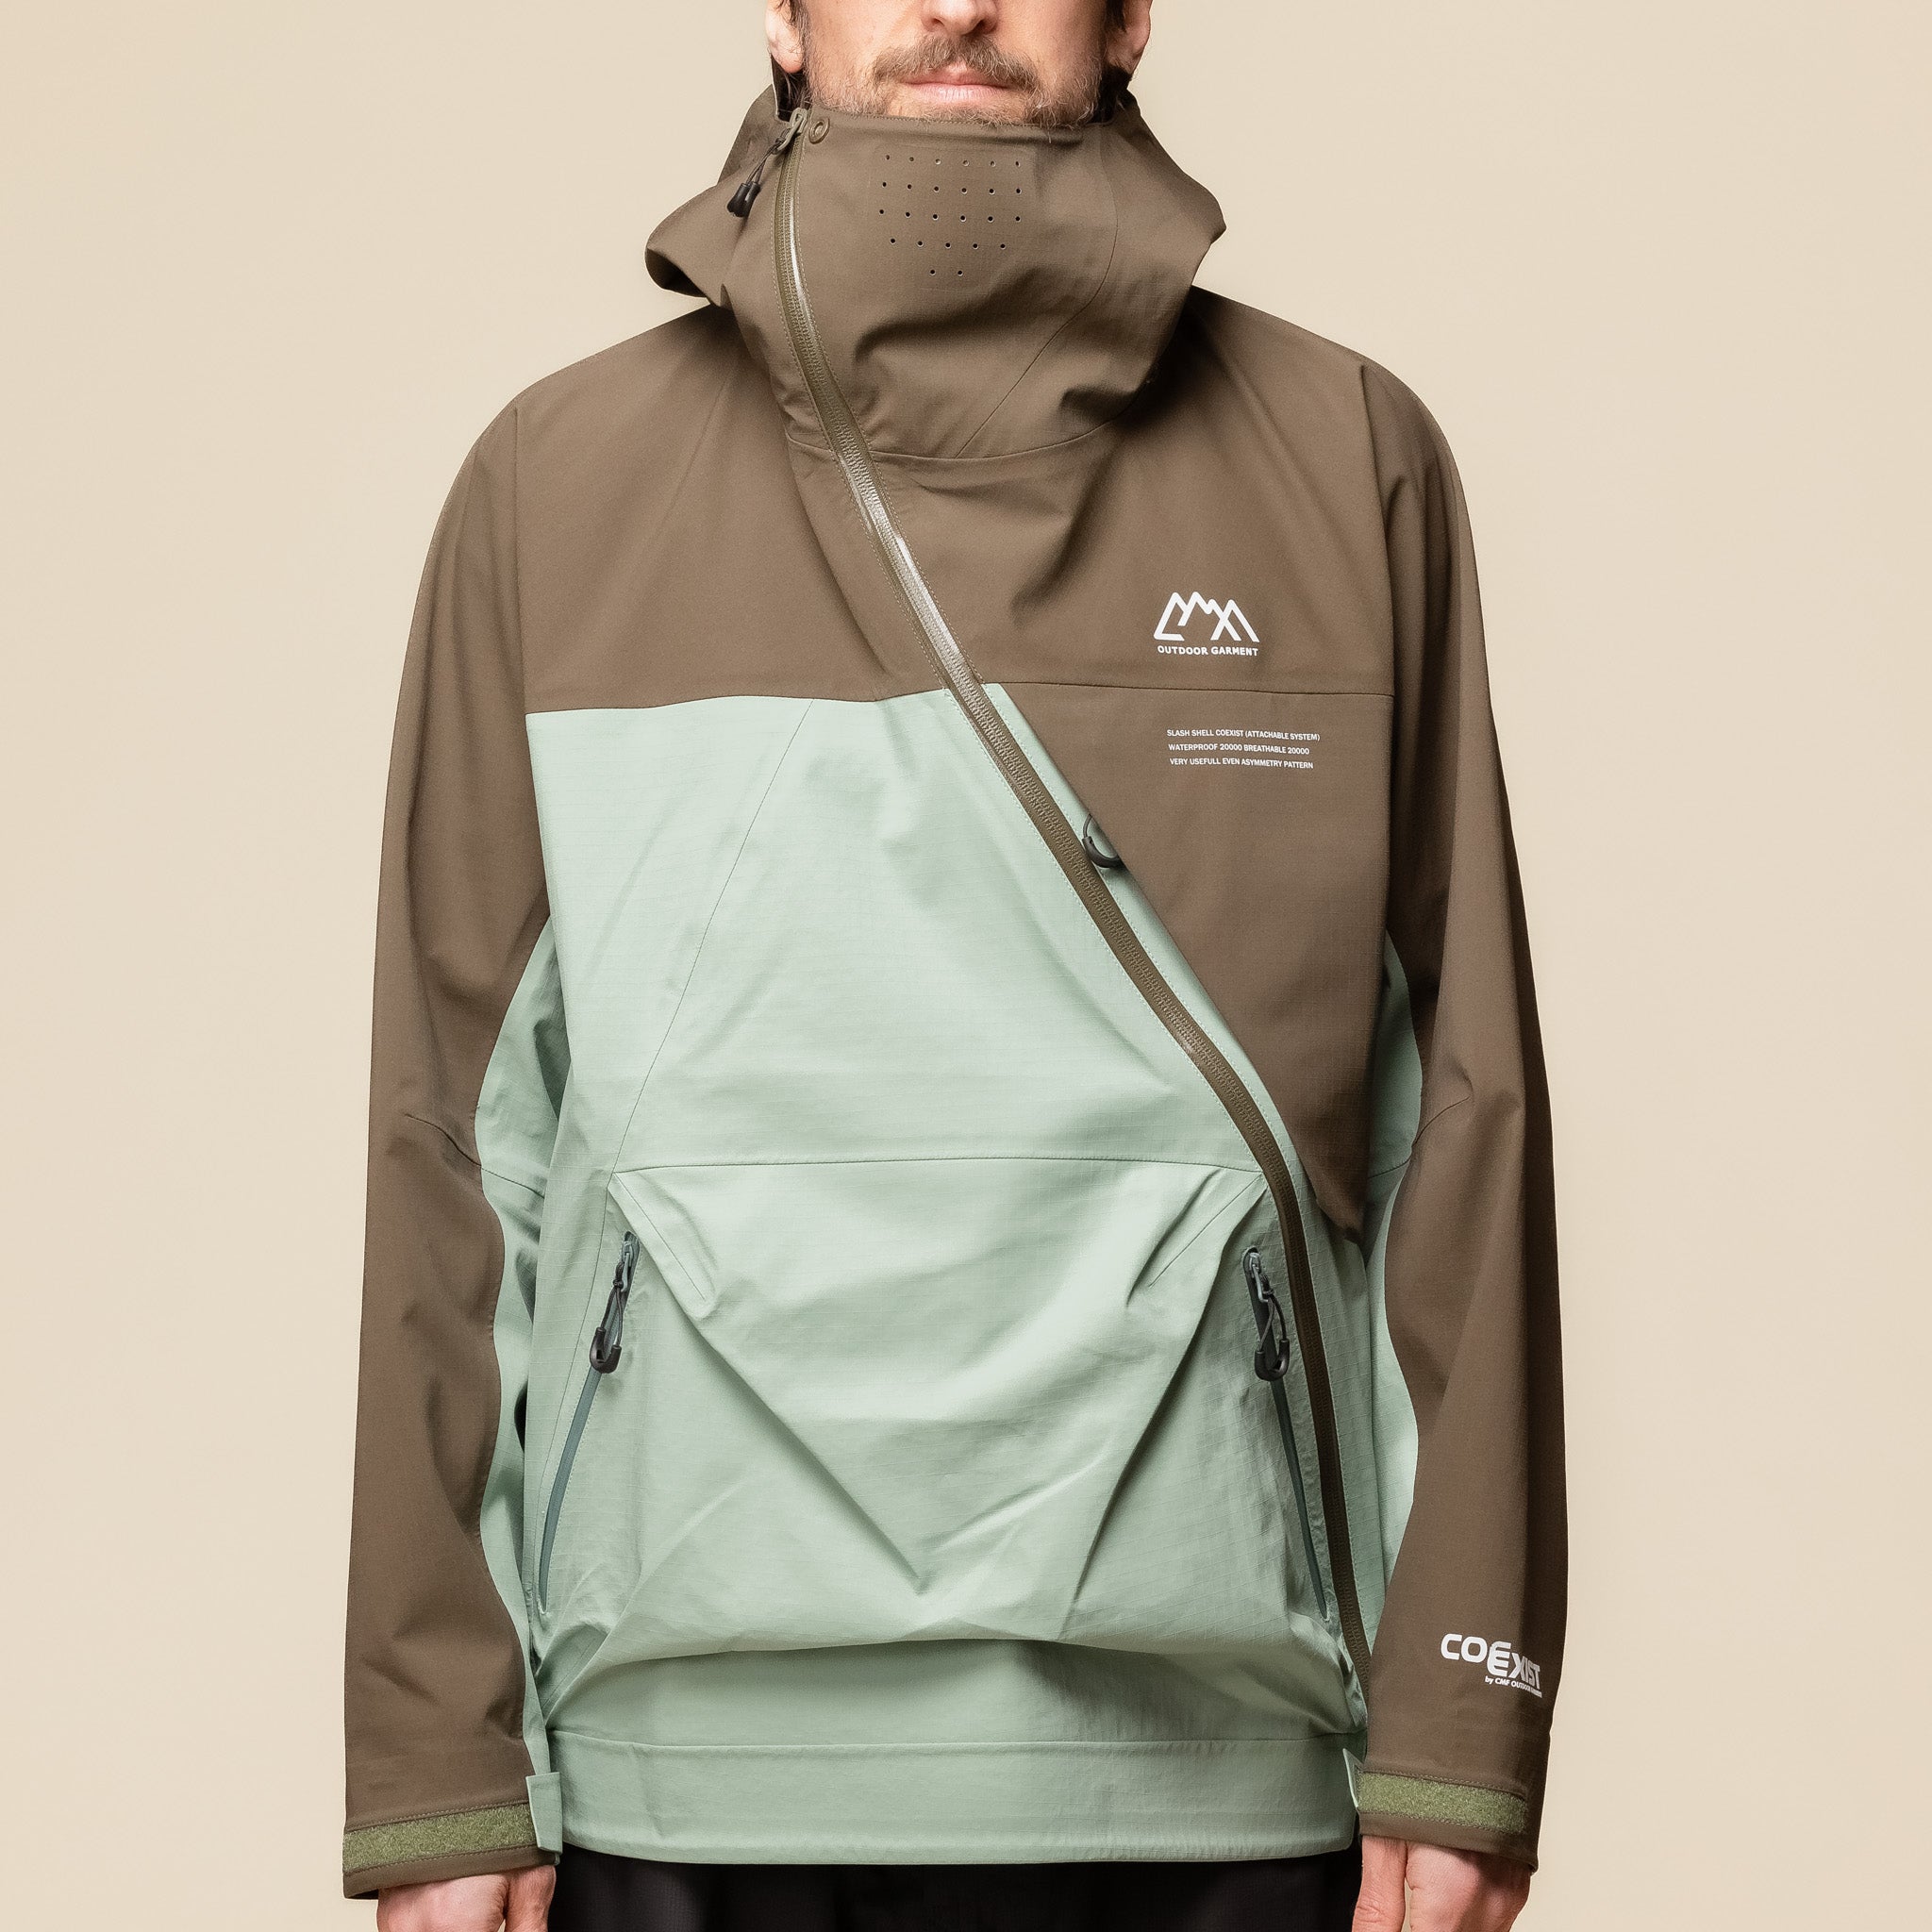 CMF Comfy Outdoor Garment - Slash Shell Coexist Jacket - Khaki